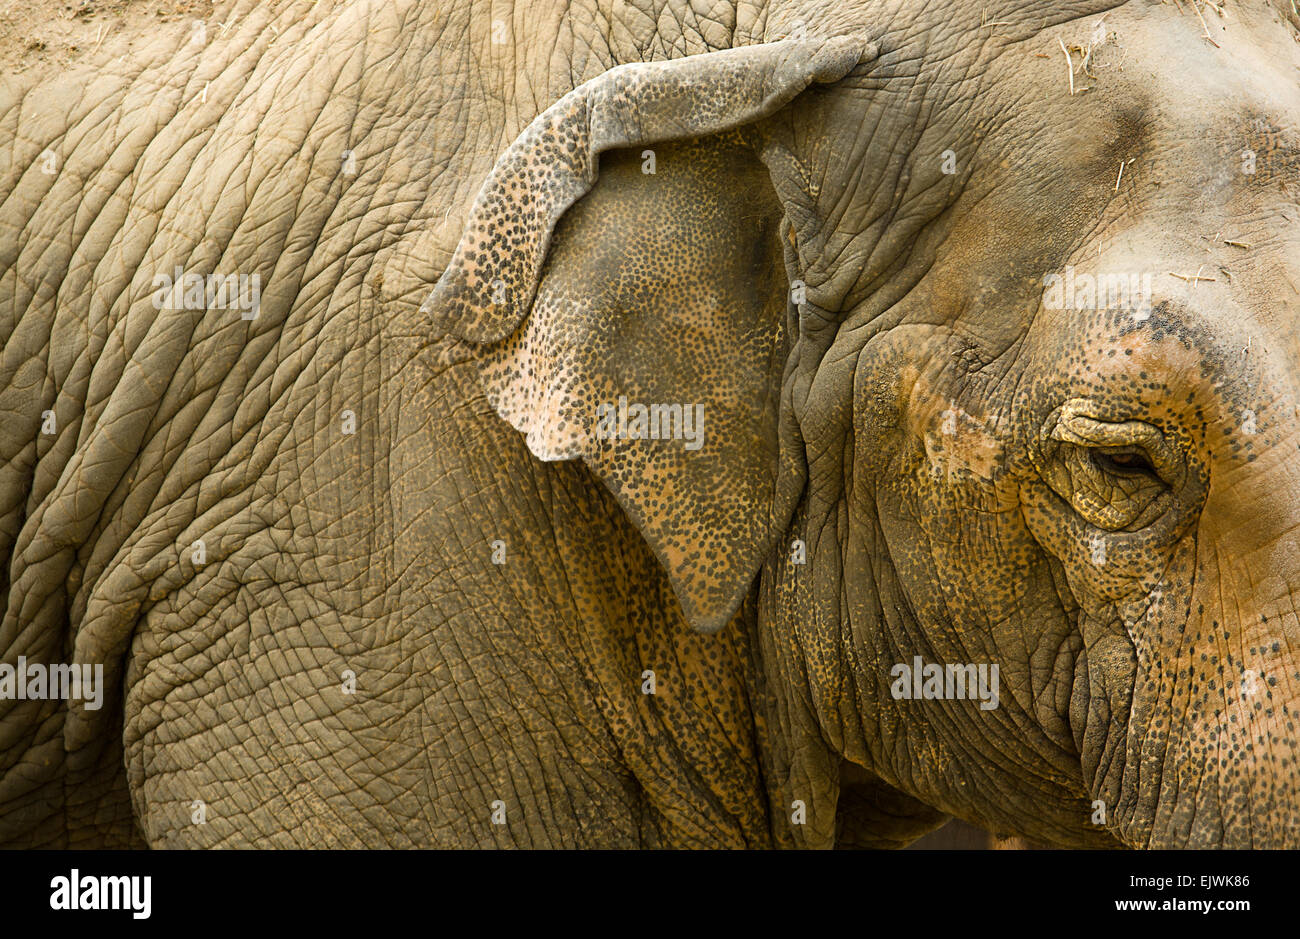 Vista de cerca de un elefante asiático, Elephas maximus Foto de stock